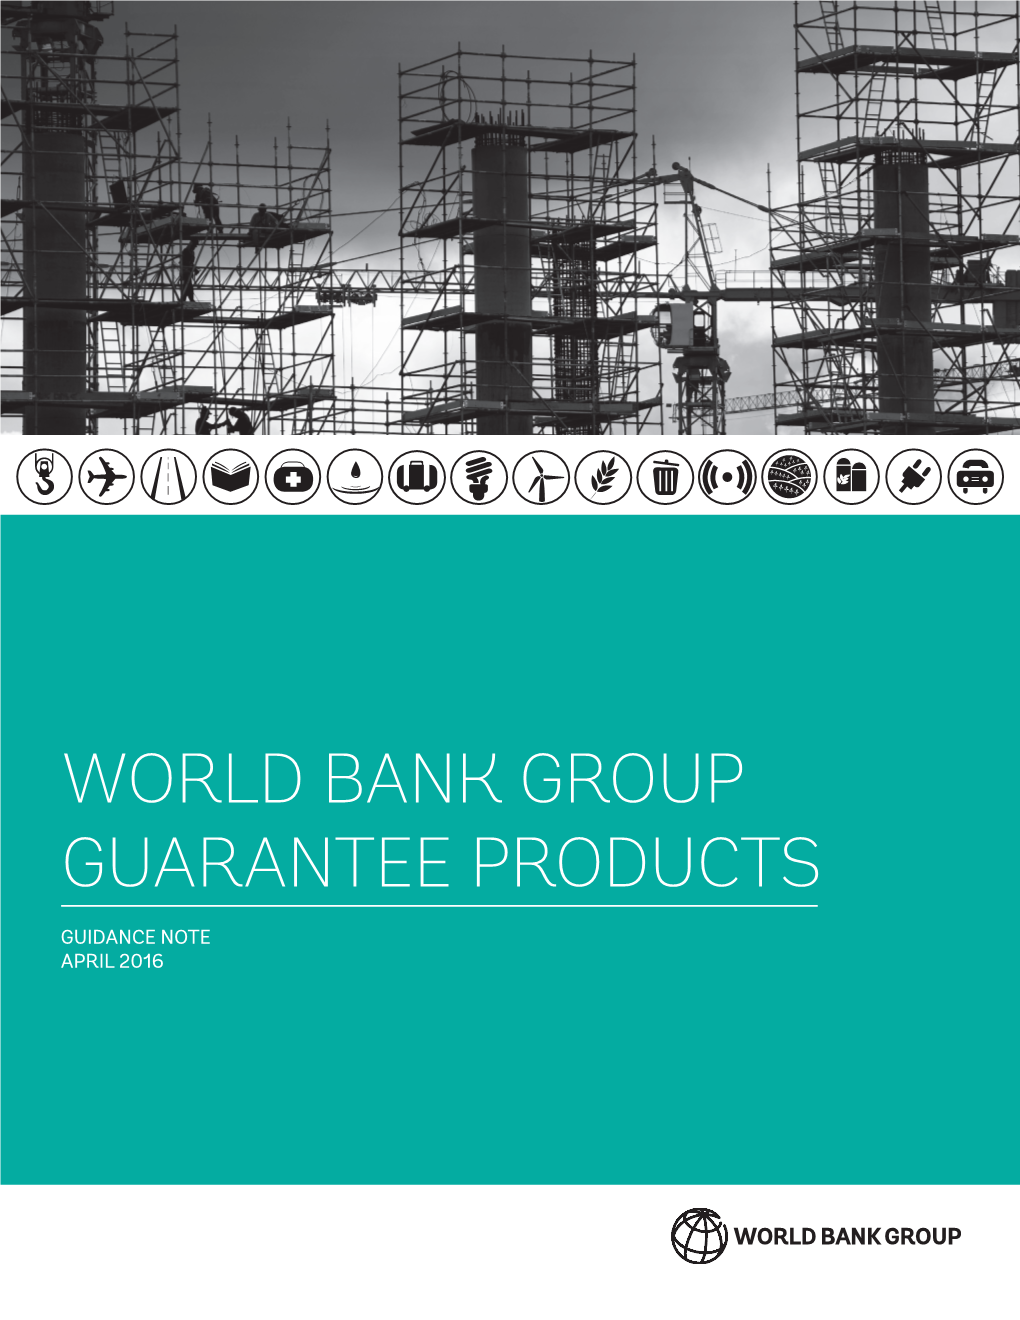 World Bank Group Guarantee Products